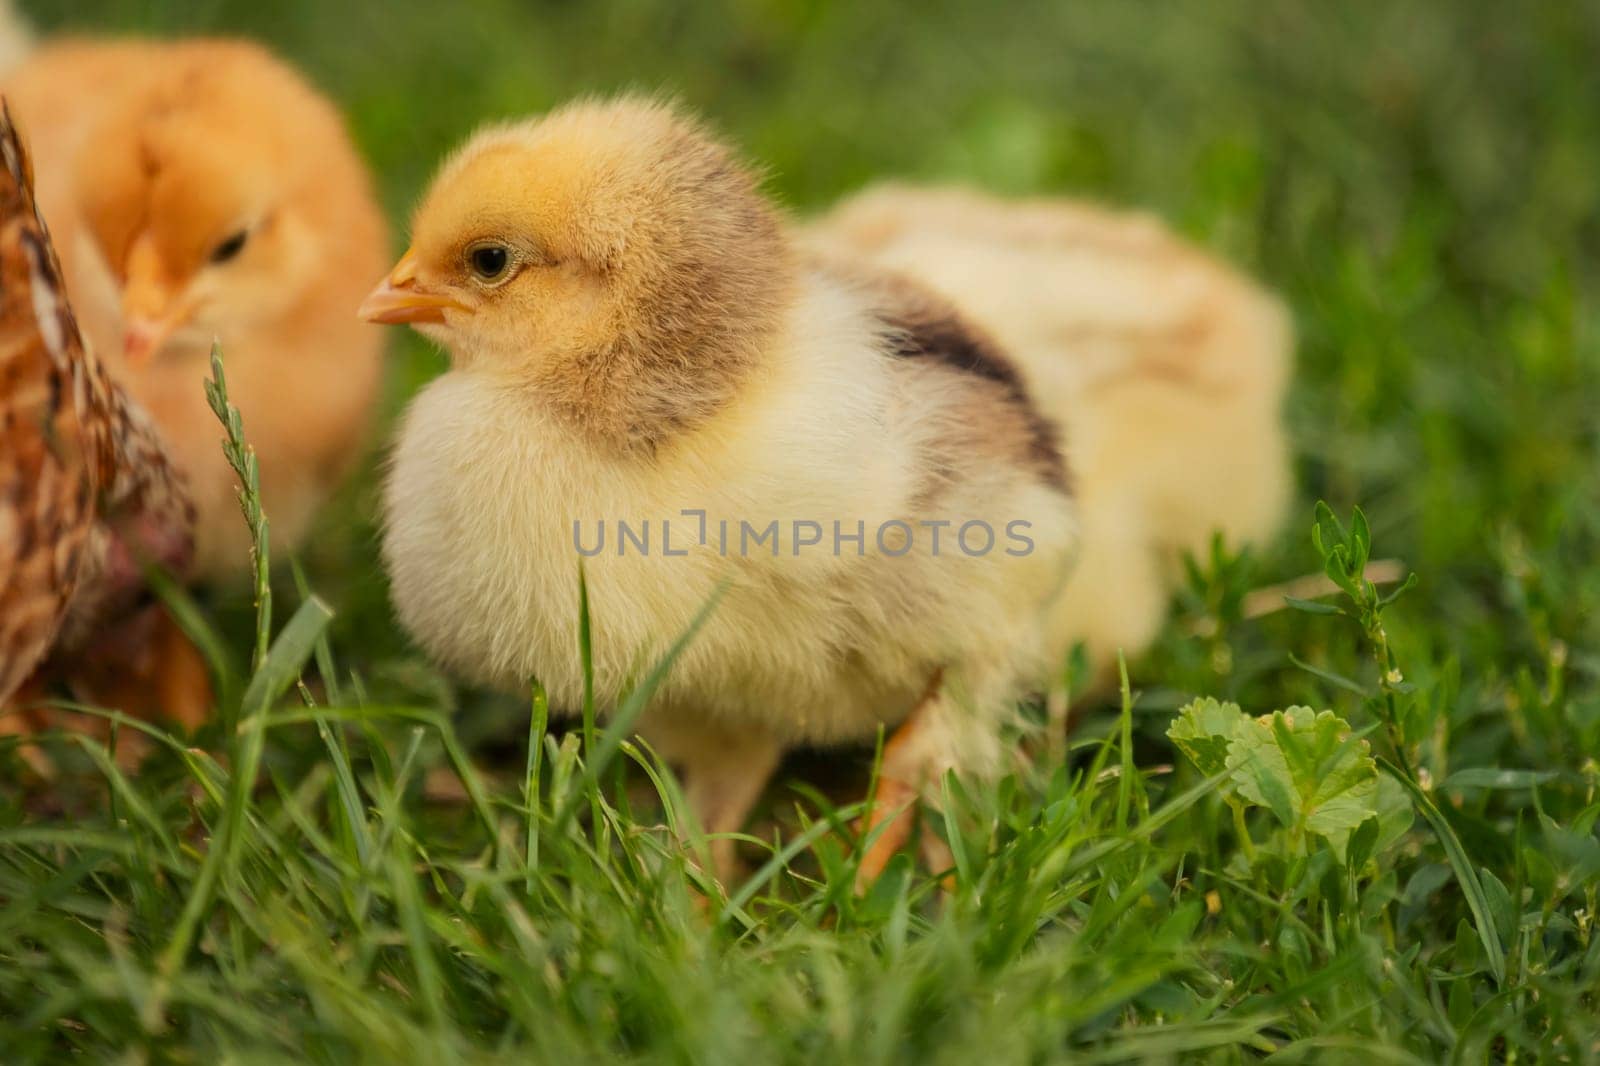 little chickens stand near their mother chicken by zokov